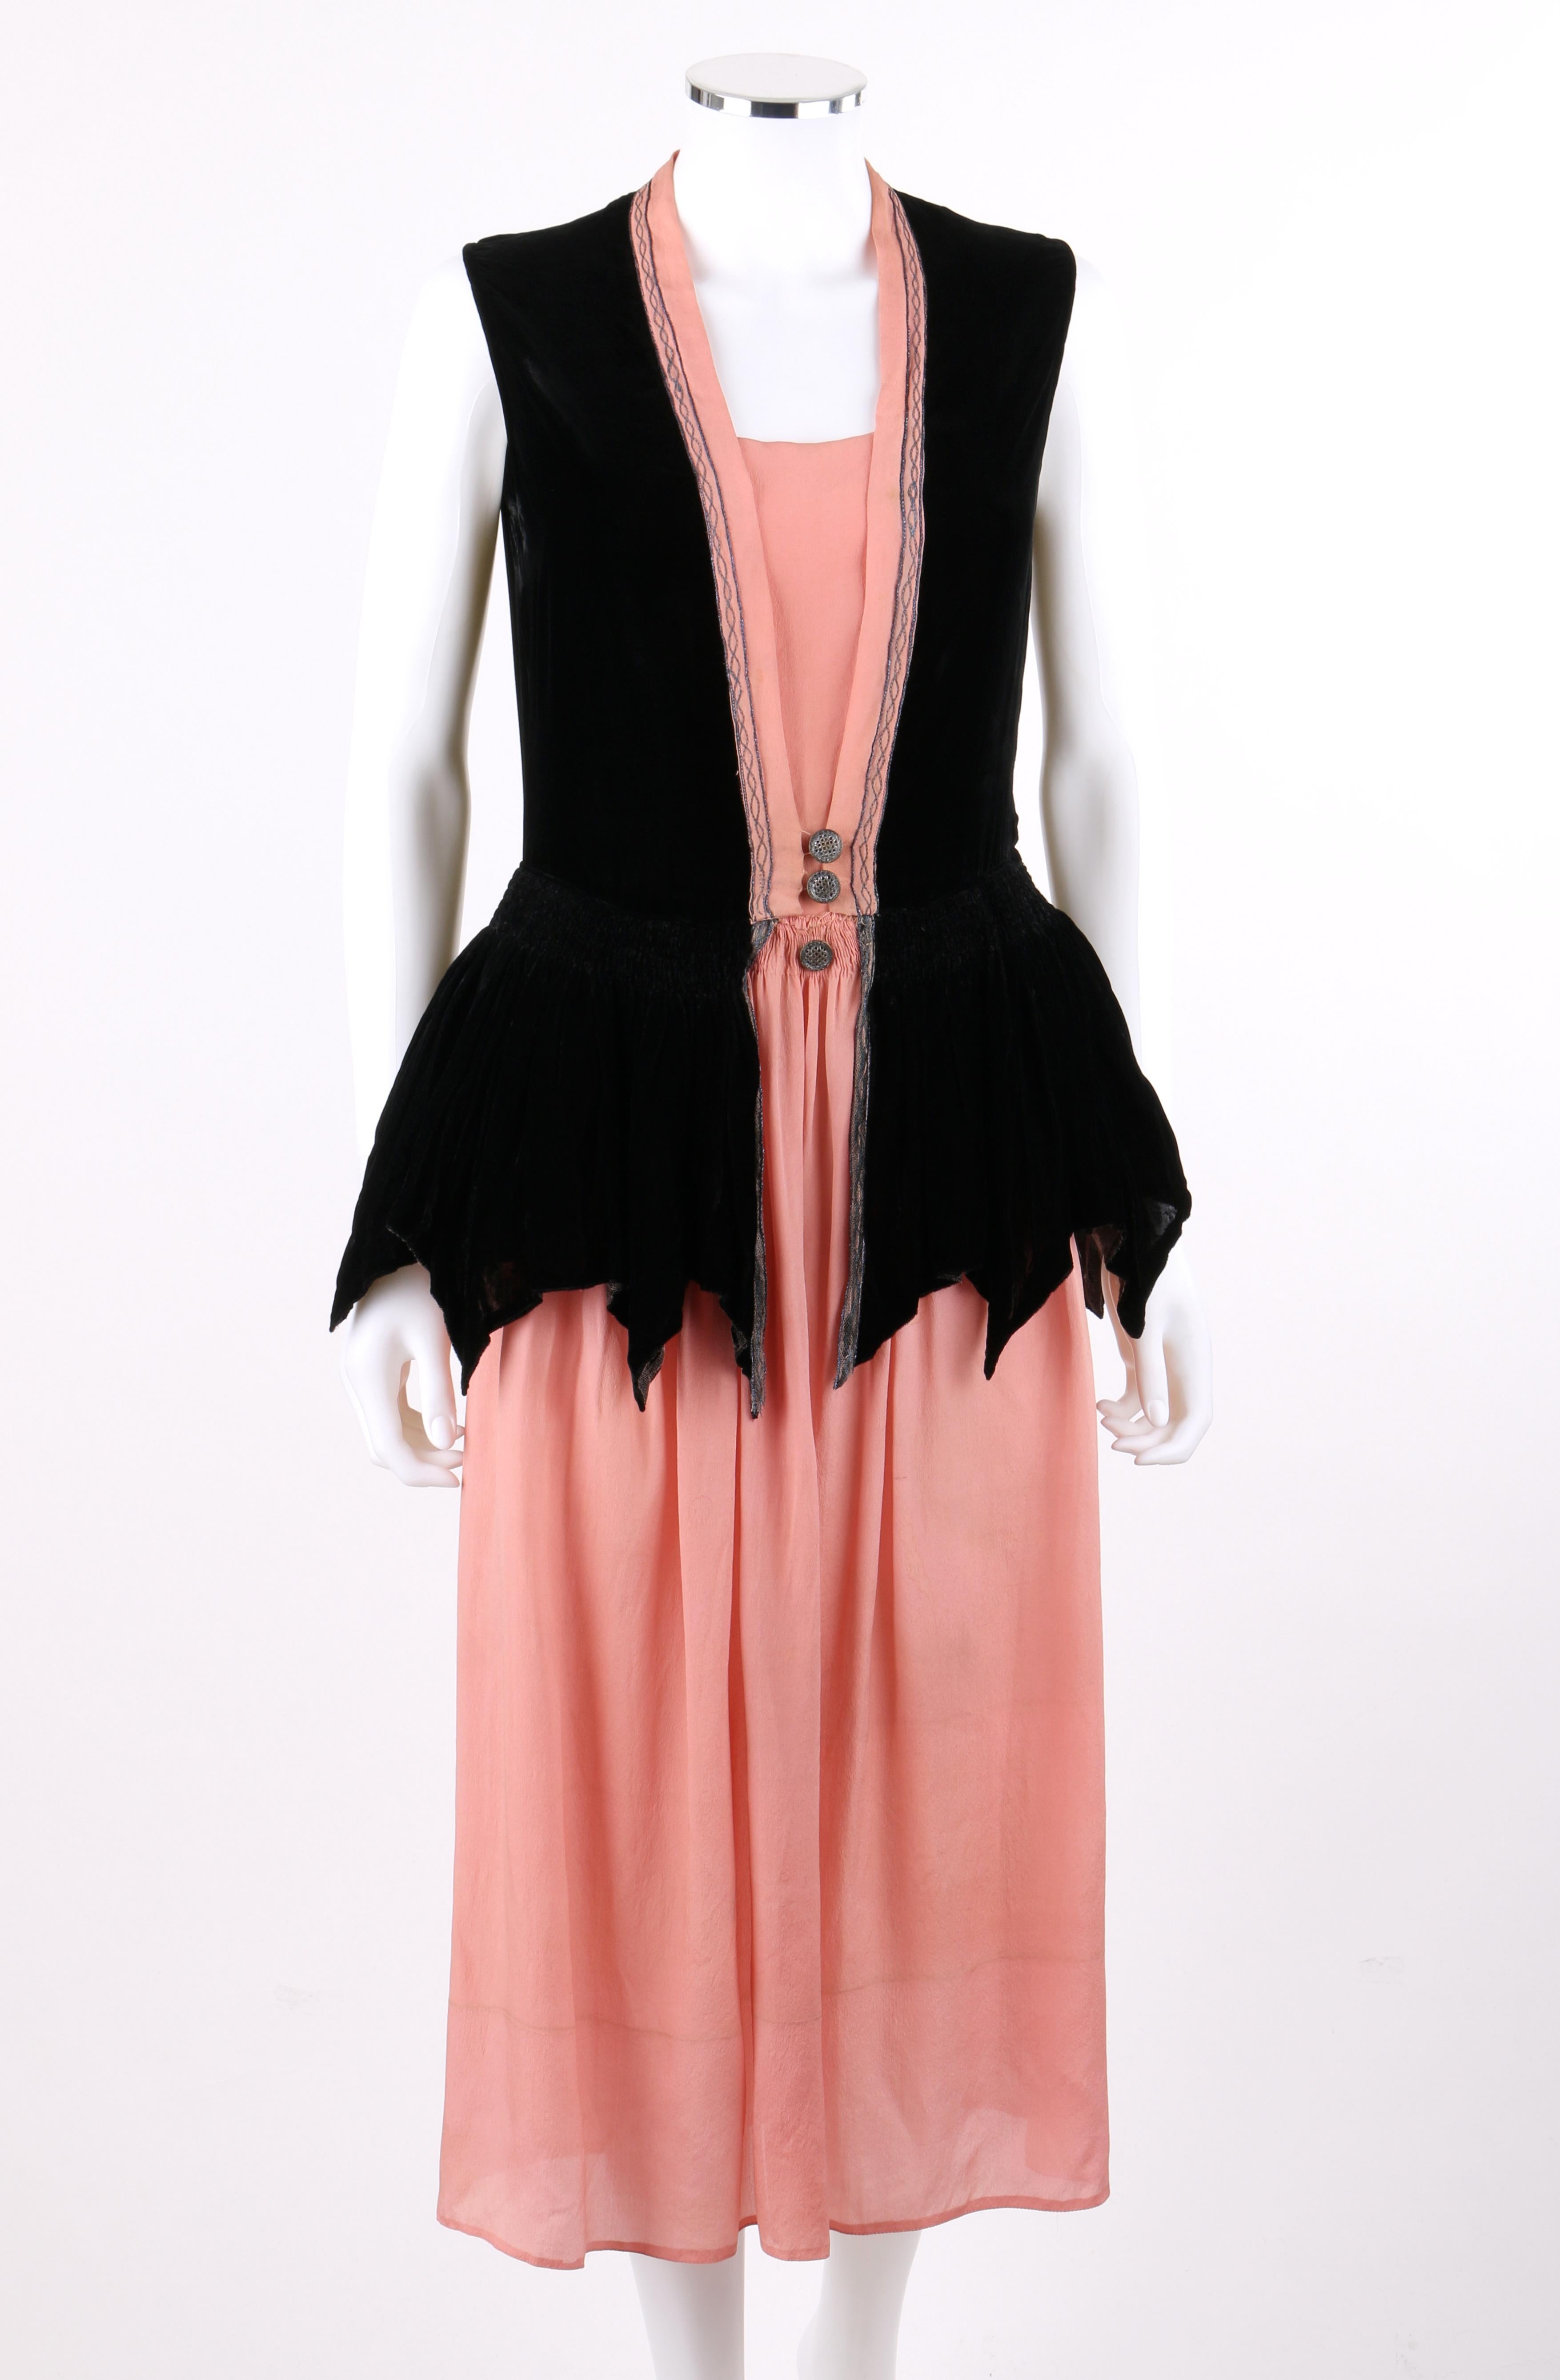 DESCRIPTION: BARNETT c.1910's Rose Pink & Black Silk Velvet Sleeveless Peplum Evening Dress 
 
Circa: c.1910's Edwardian / 1920's Flapper
Label(s): Barnett 
Style: Peplum dress
Color(s): Rose pink, black, and metallic blue
Lined: No
Unmarked Fabric